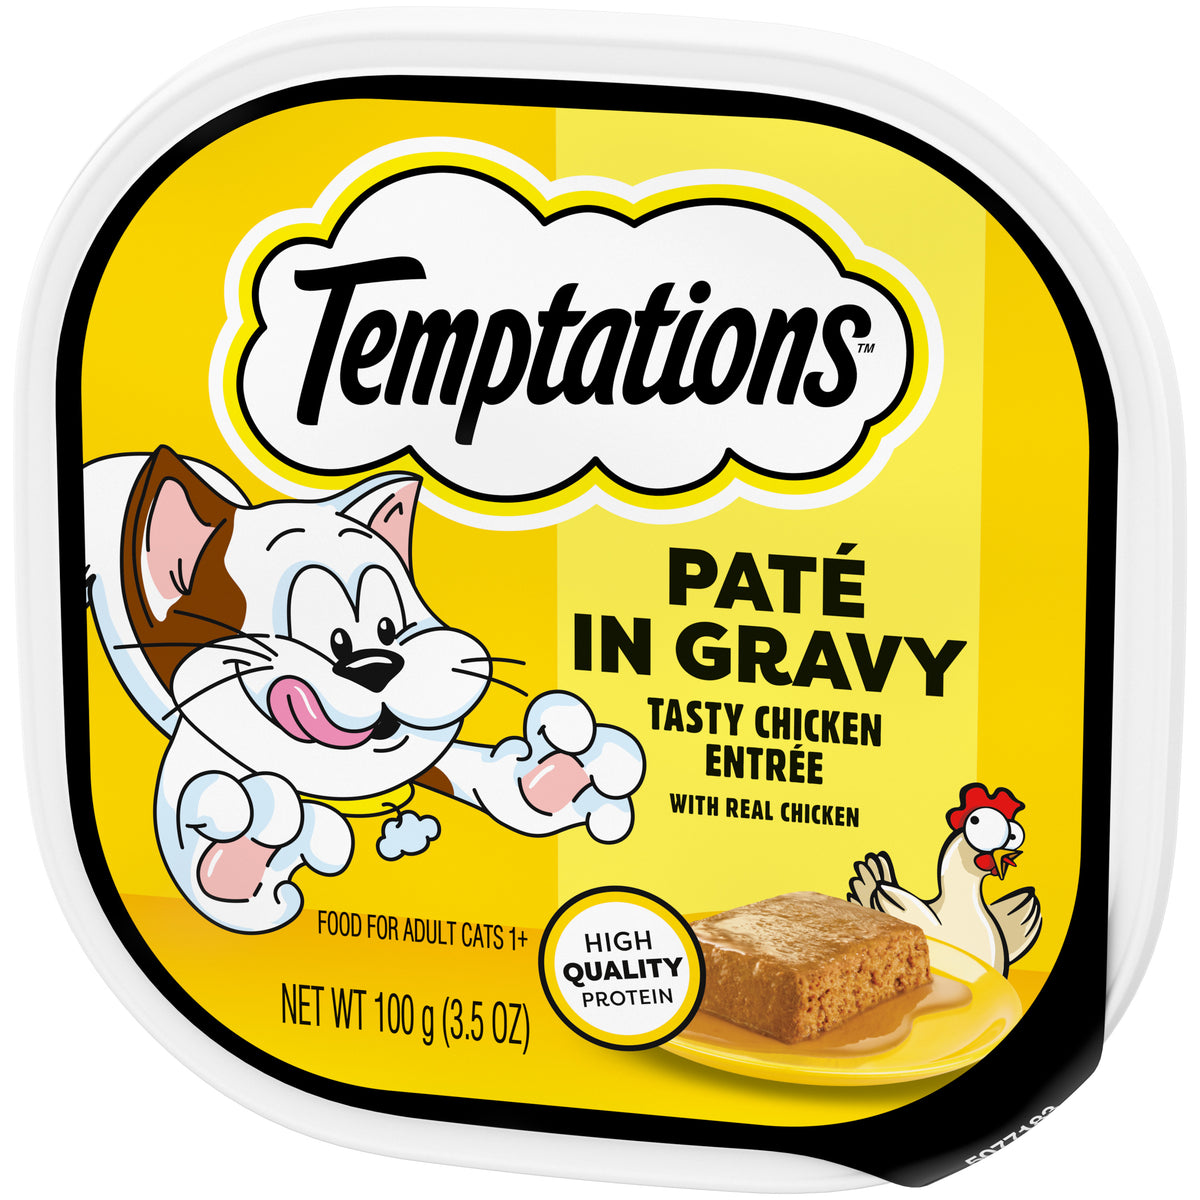 [Temptations][Temptations Wet Cat Food, Tasty Chicken Flavor Paté in Gravy, 3.5 oz. Tray][Image Center Right (3/4 Angle)]